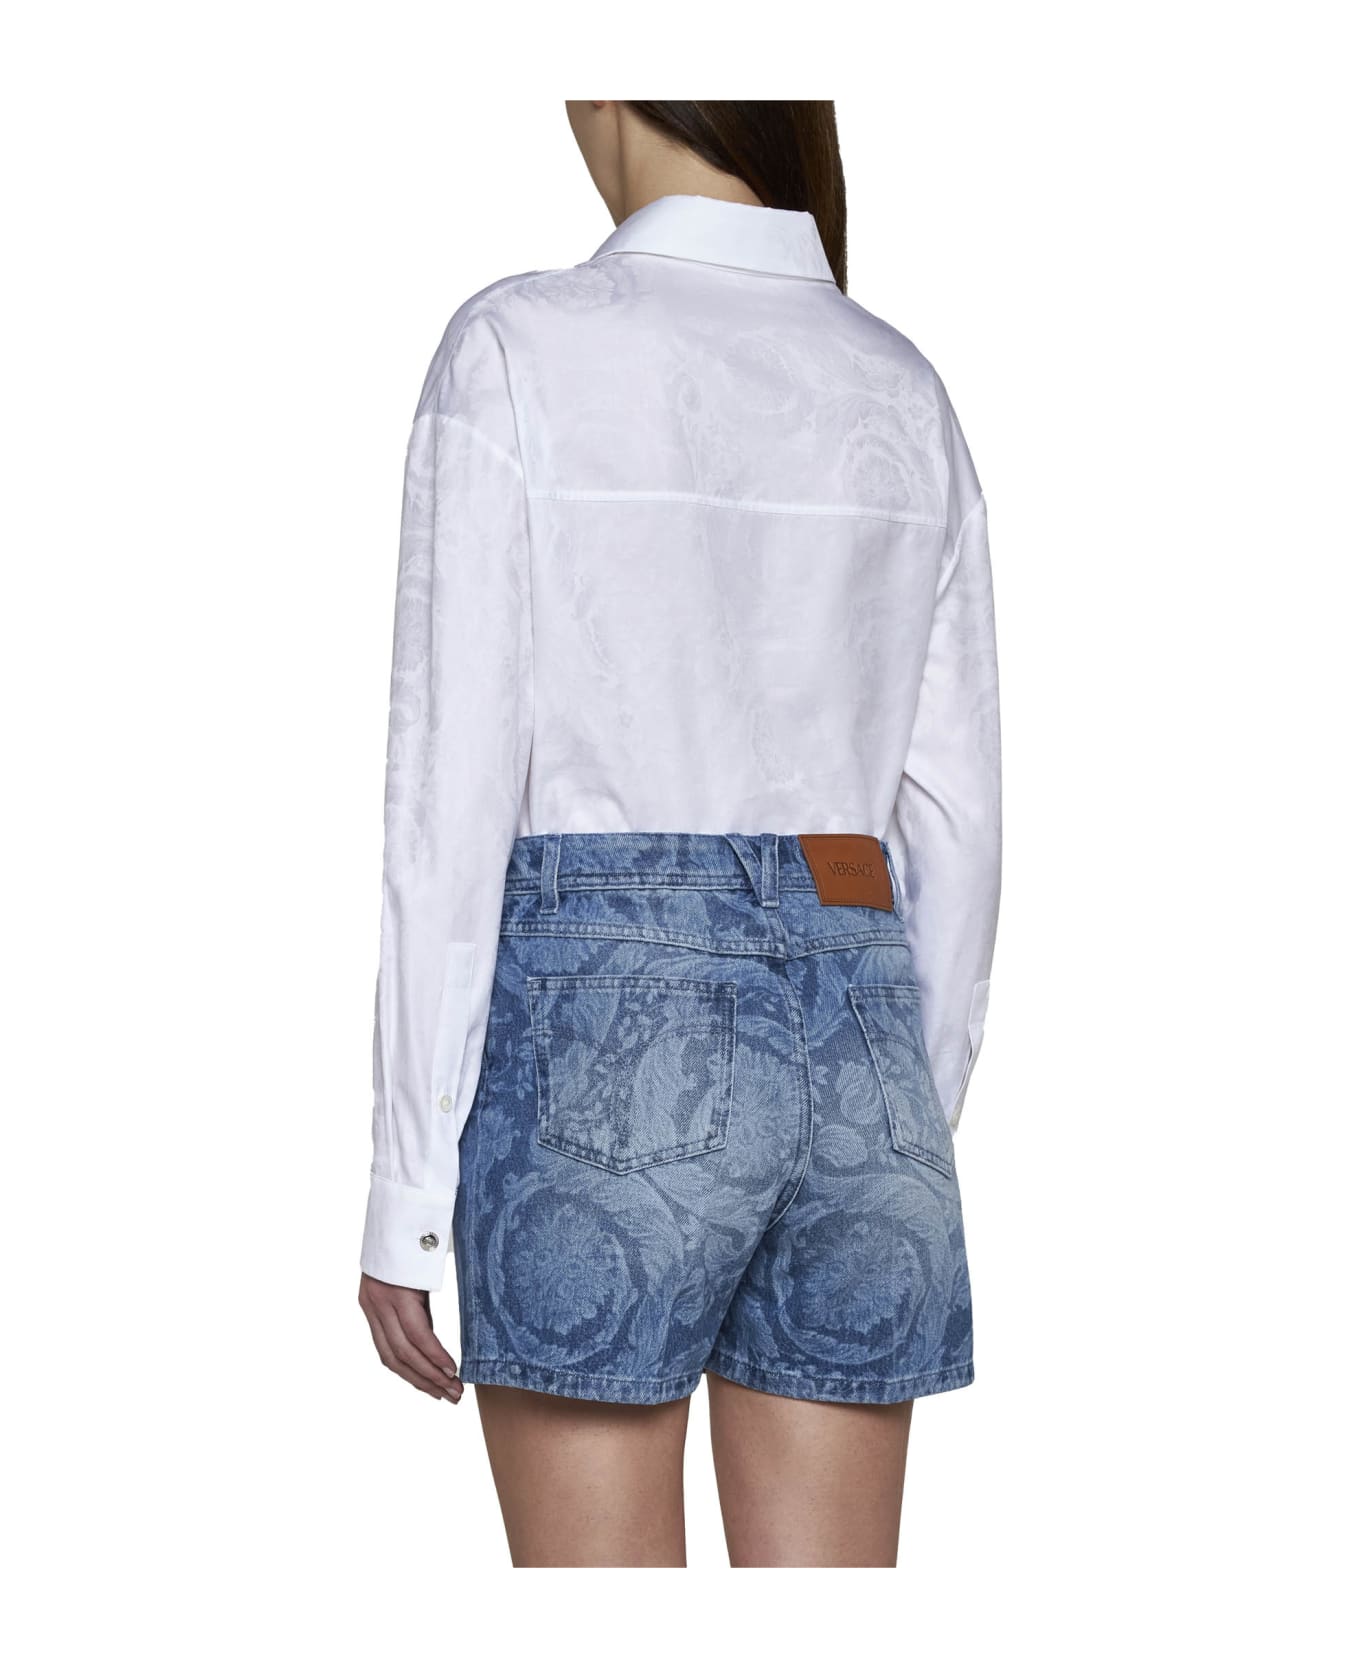 Versace Slim Fit Denim Shorts - Medium blue